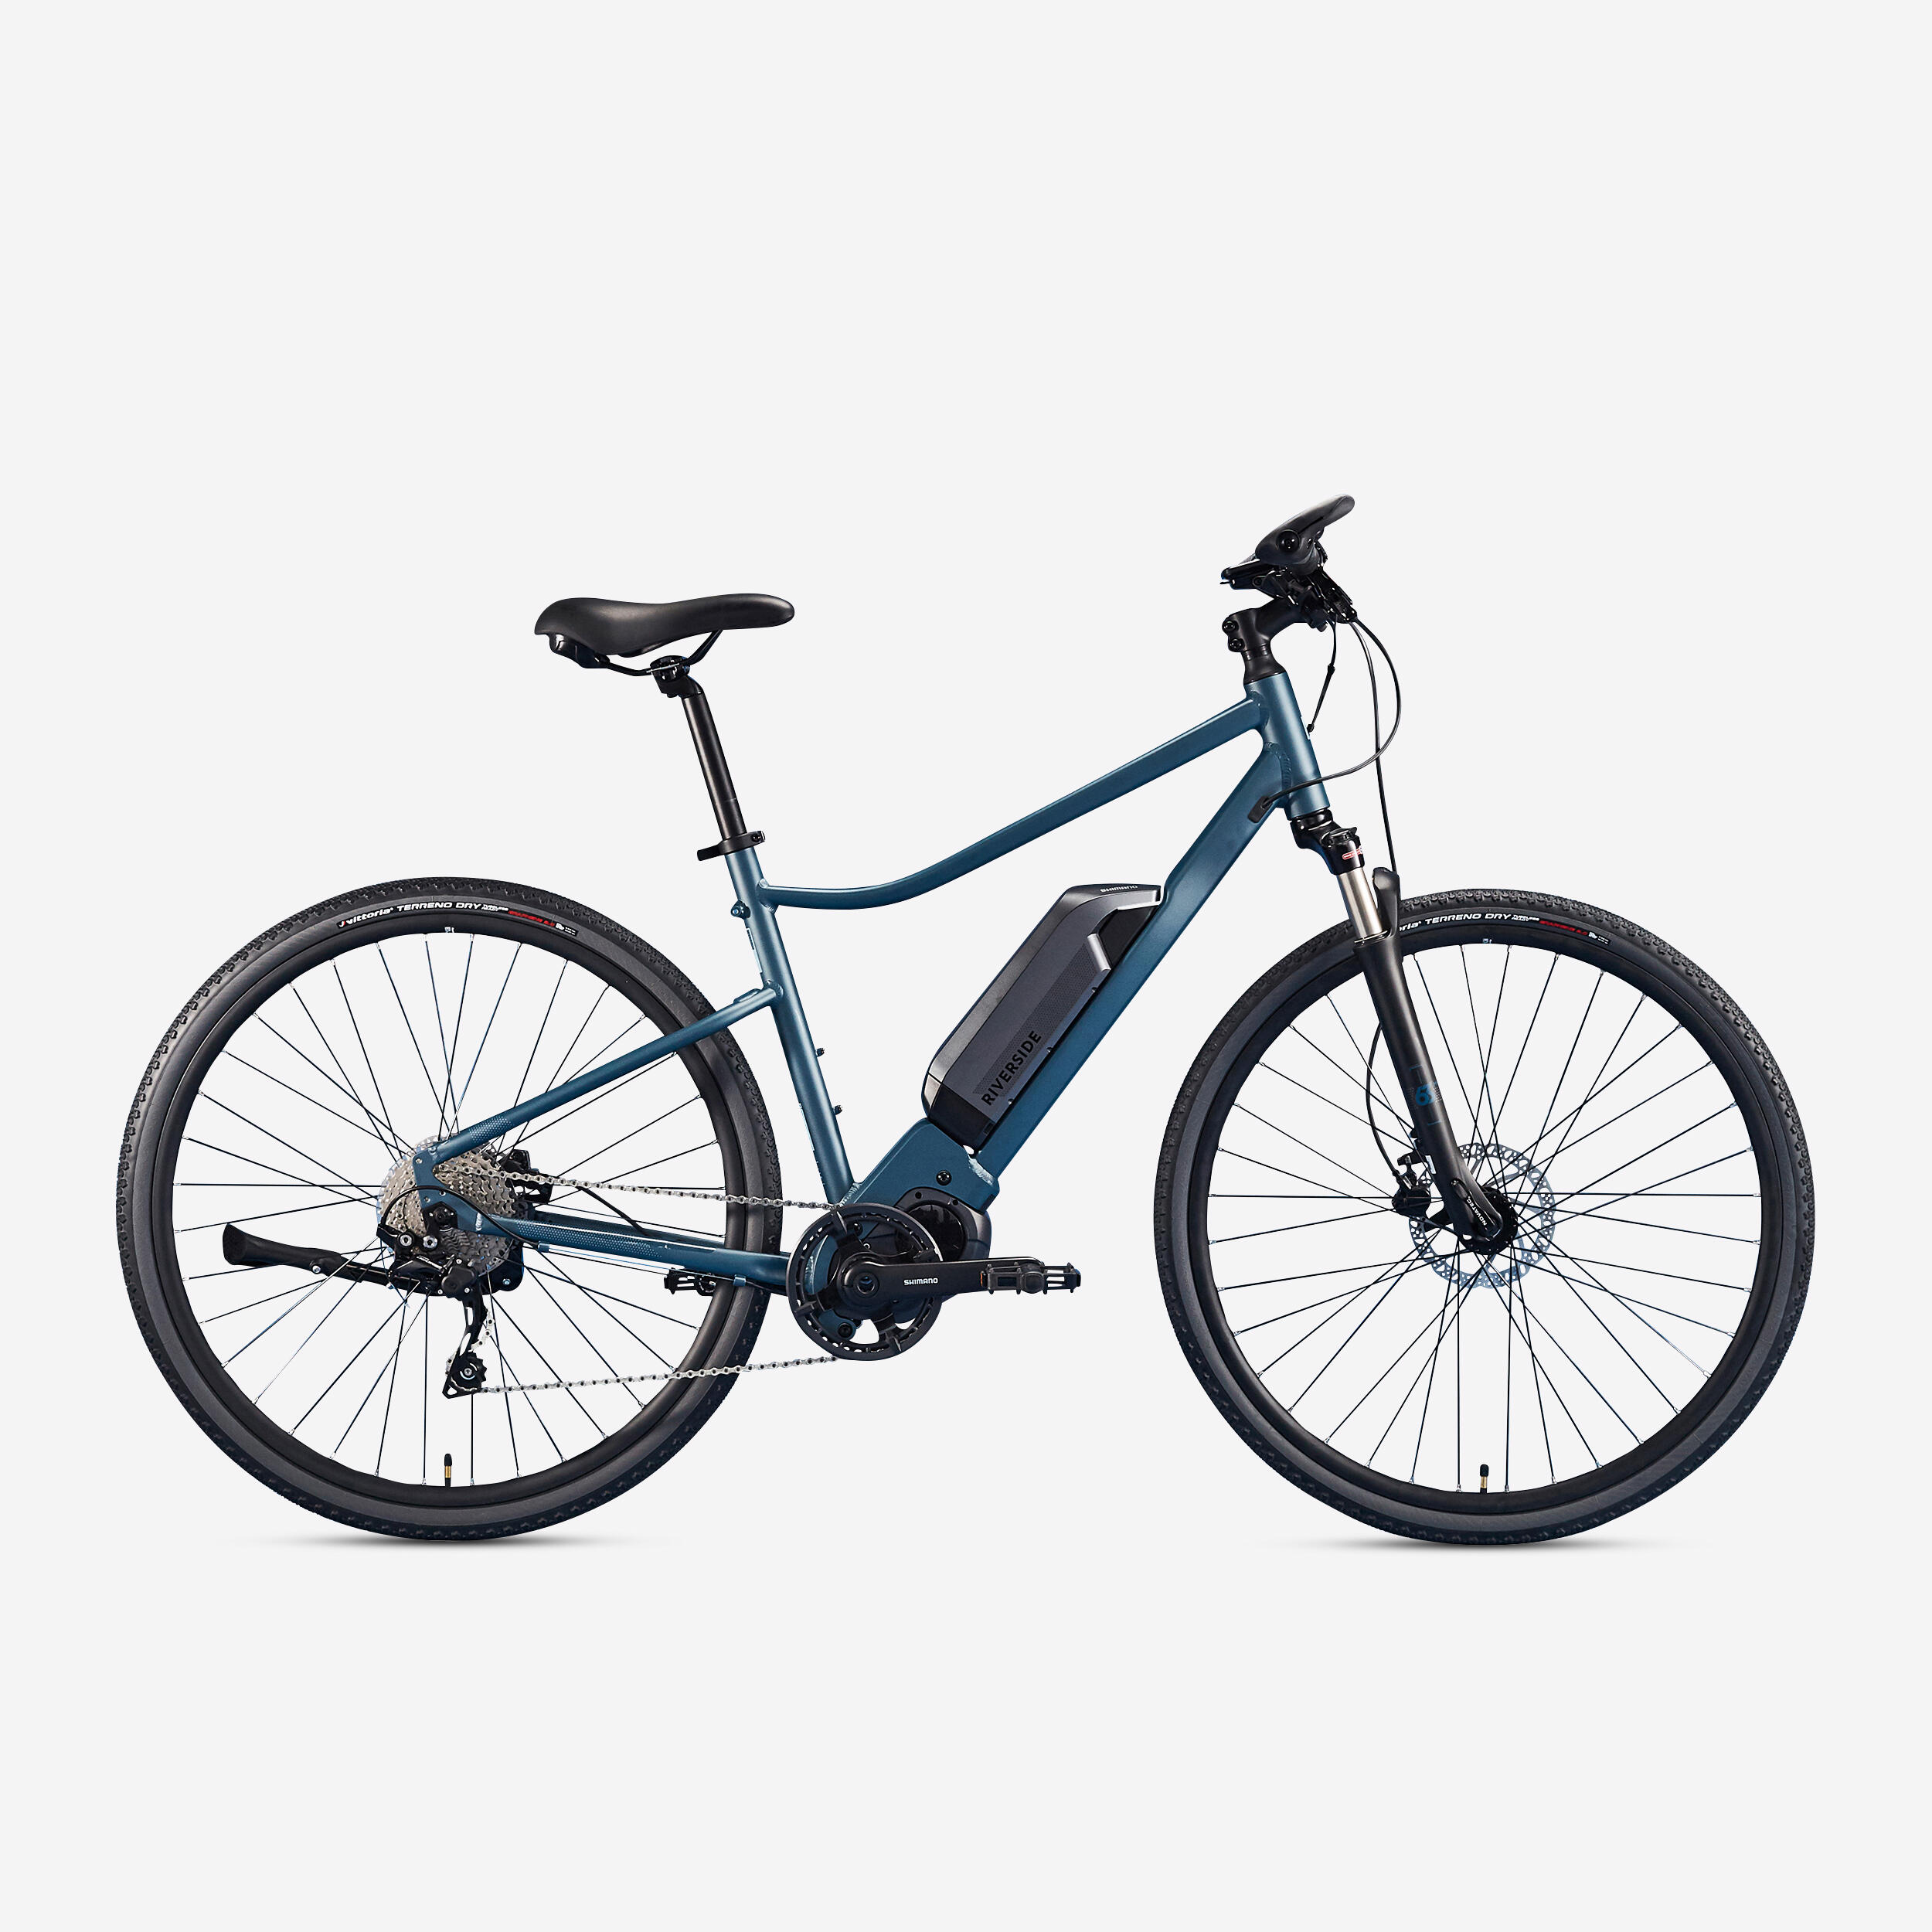 Shimano 60 Nm motor, long-distance electric hybrid bike, blue 1/20